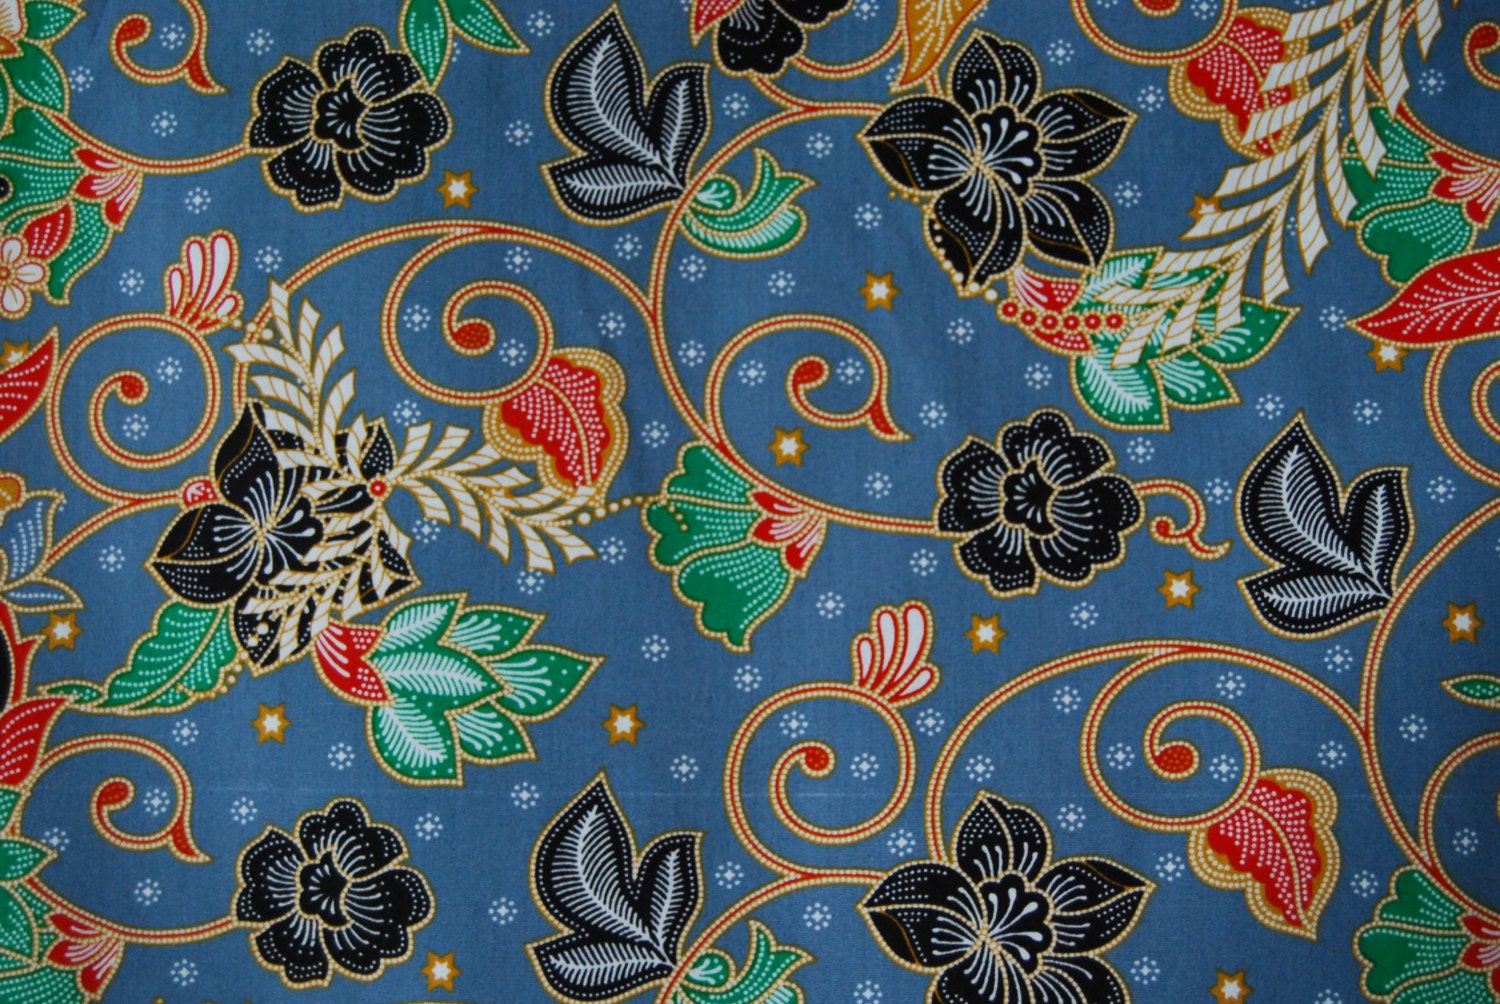 Malaysian batik fabric from MissIines on Etsy Studio